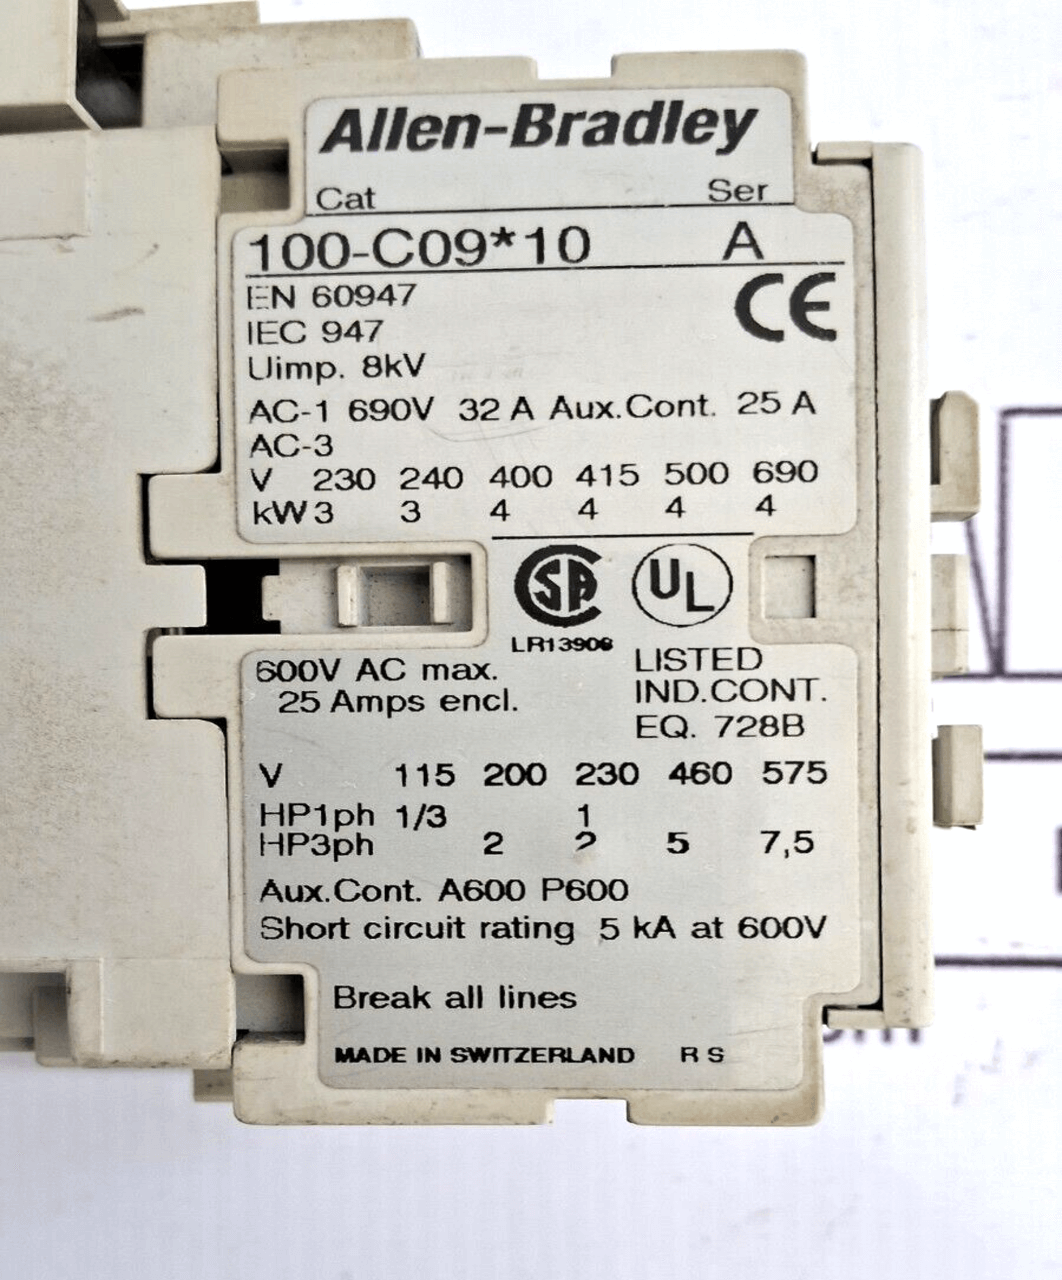 ALLEN BRADLEY 100-C09*10 SER.A CONTACTOR 